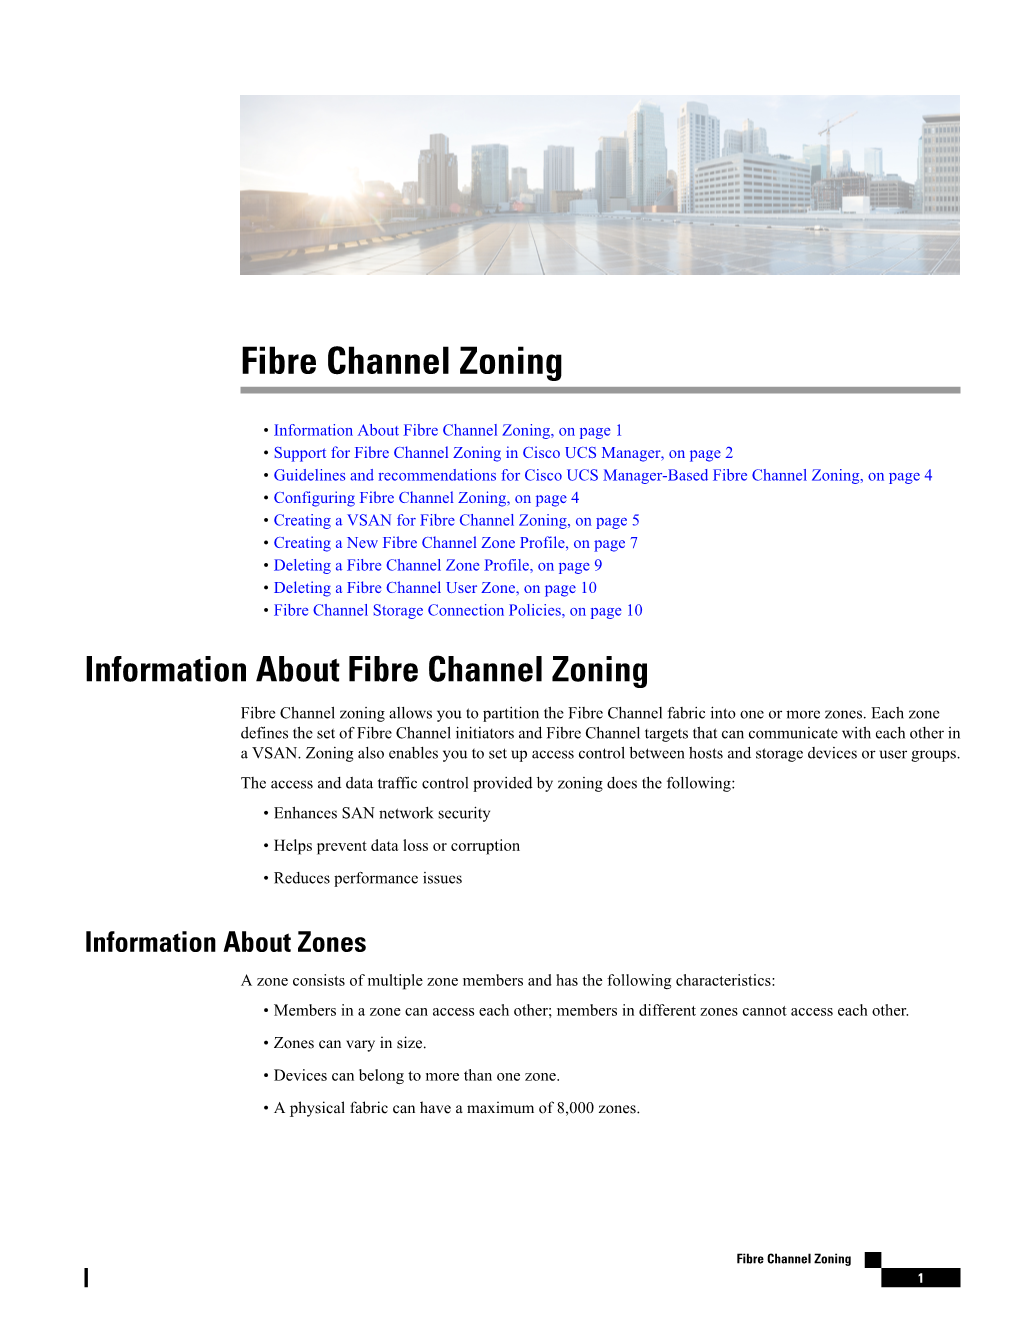 Fibre Channel Zoning